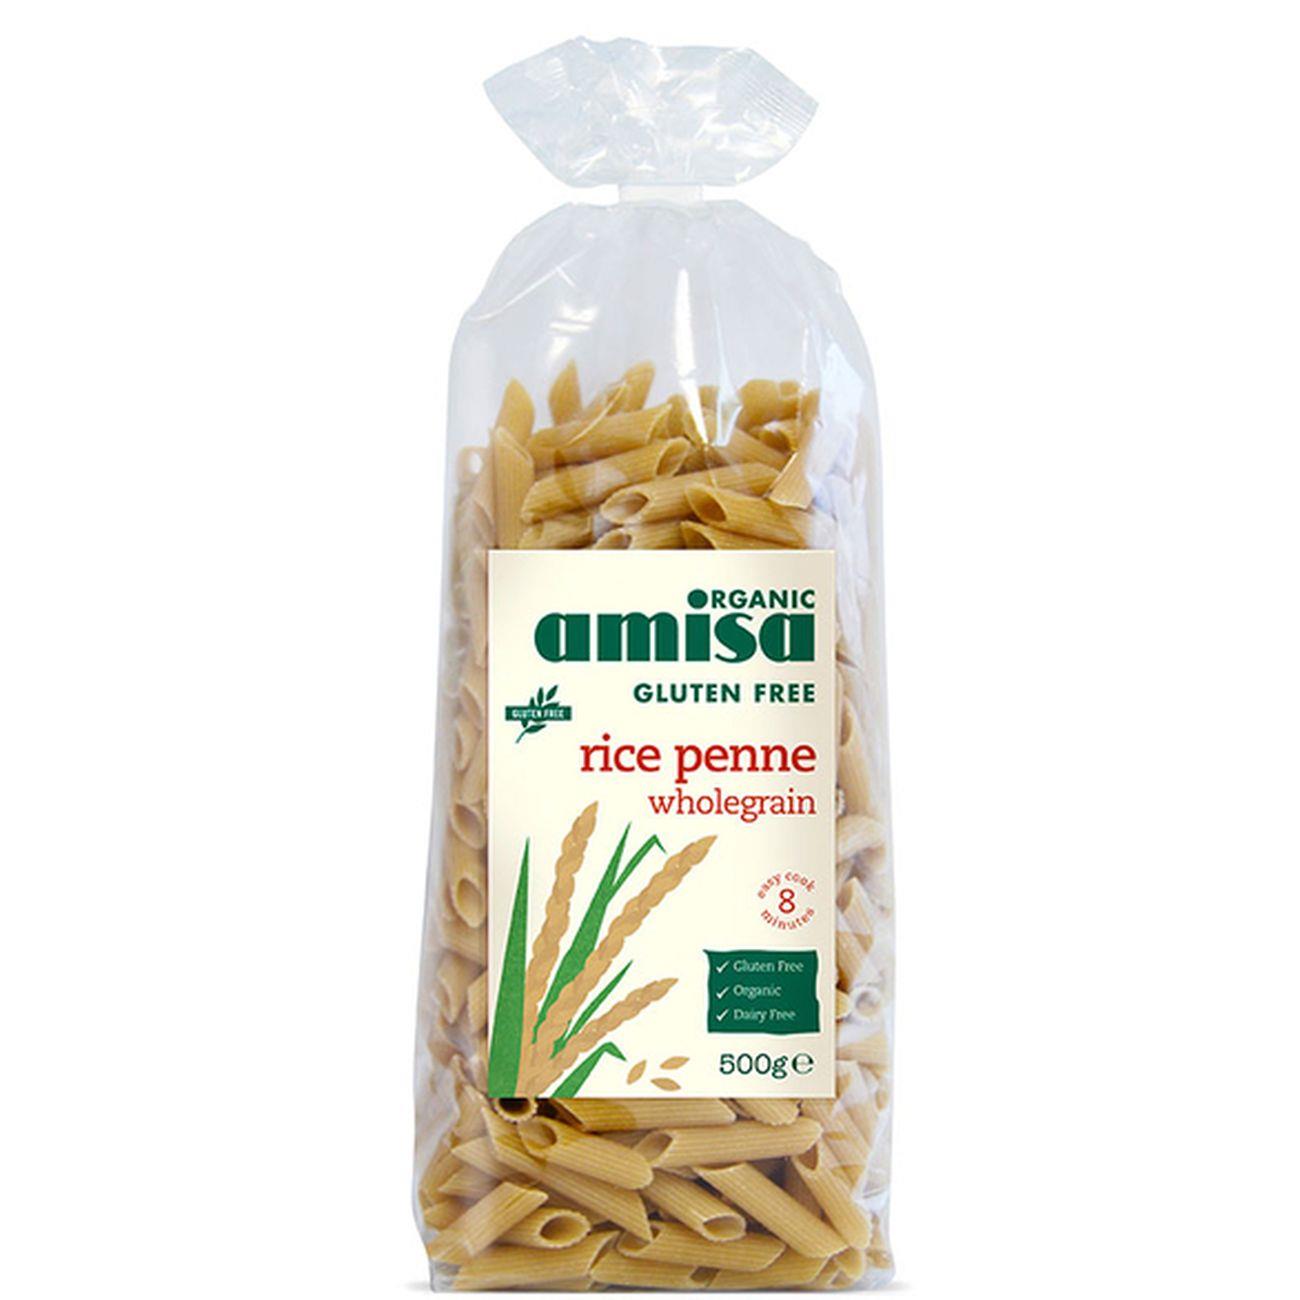 Organic Gluten Free Wholegrain Rice Penne 500g